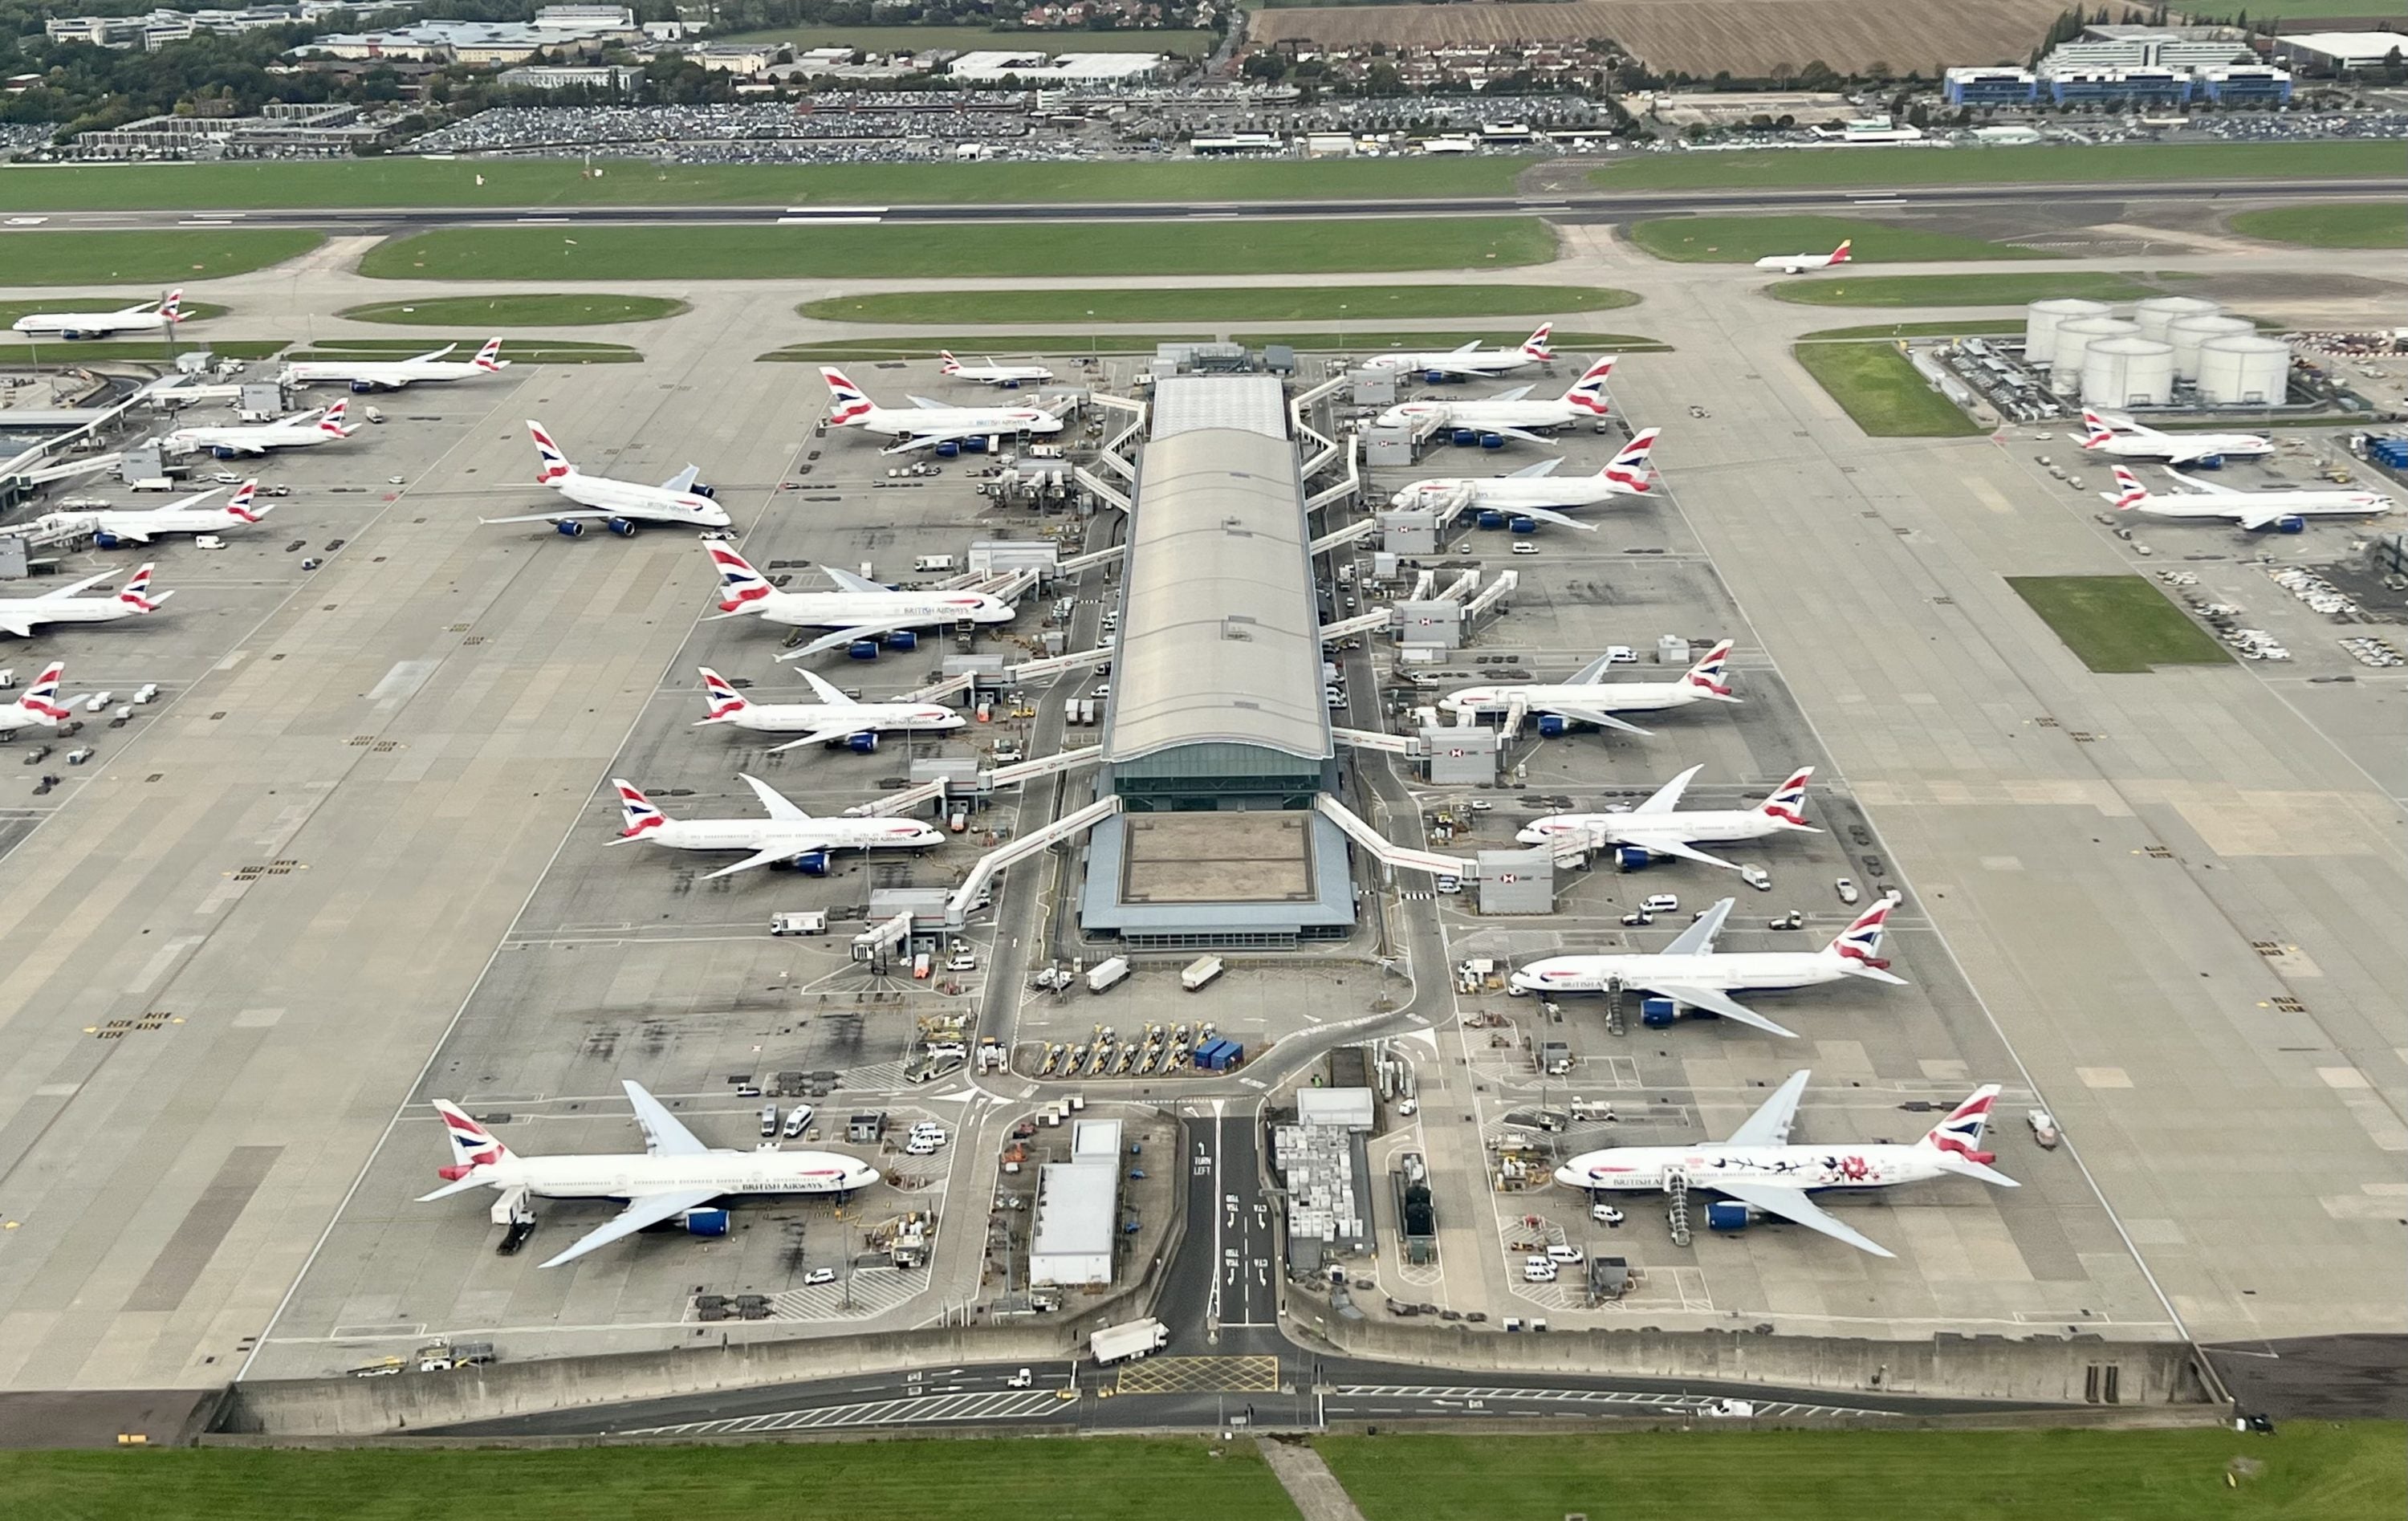 Heathrow Airport on take off